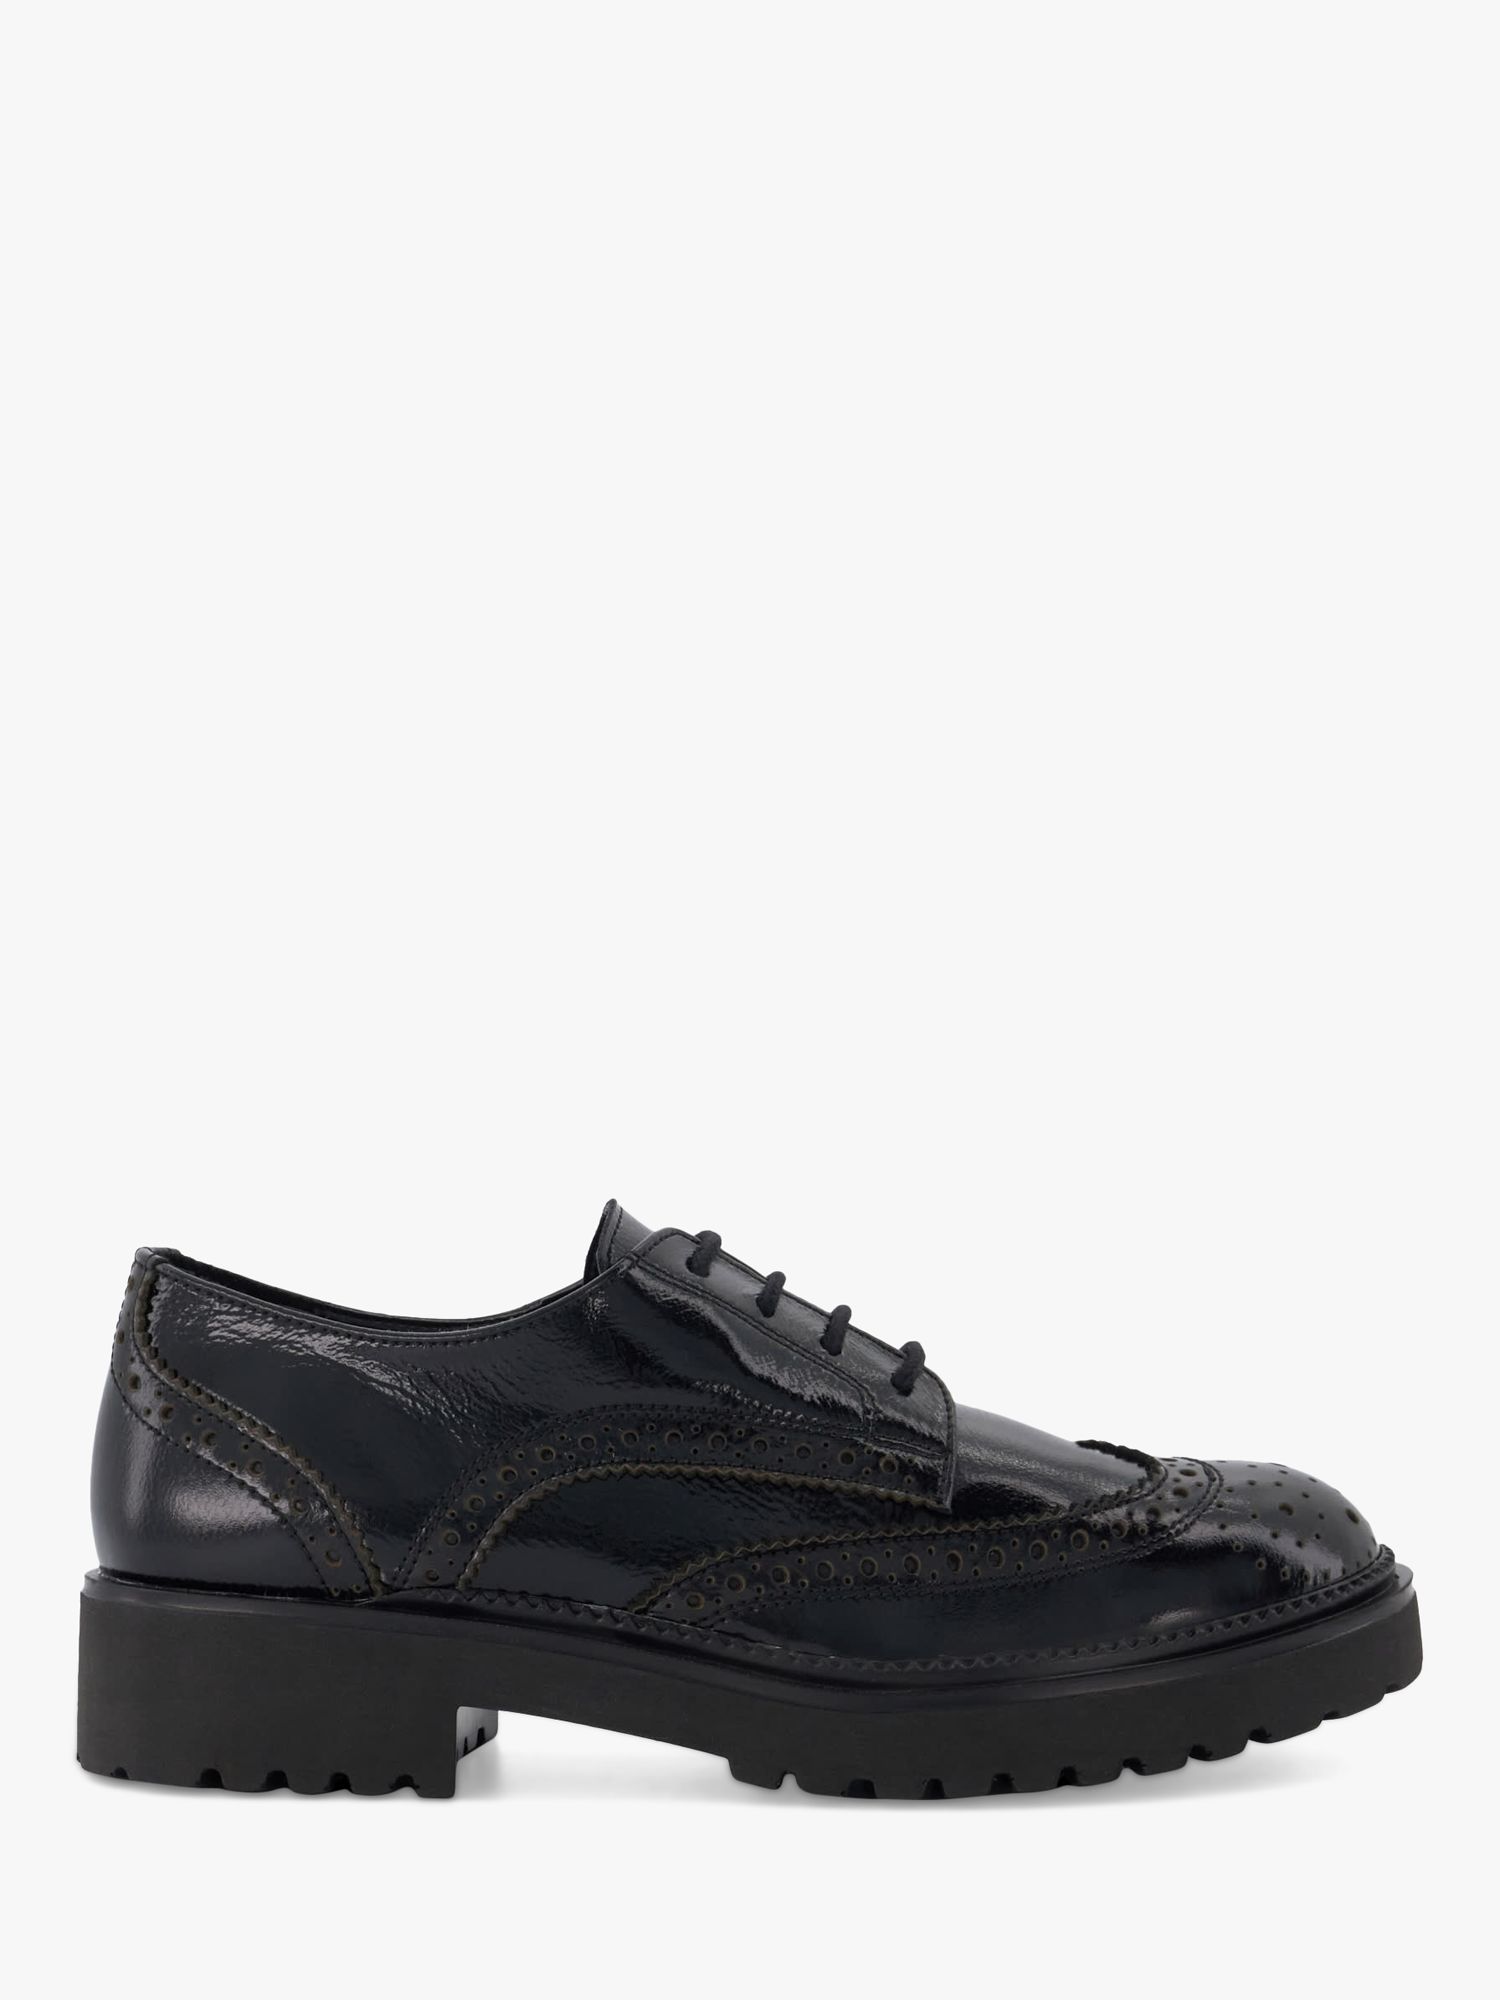 Dune Florian Leather Brogue Shoes, Black Patent at John Lewis & Partners